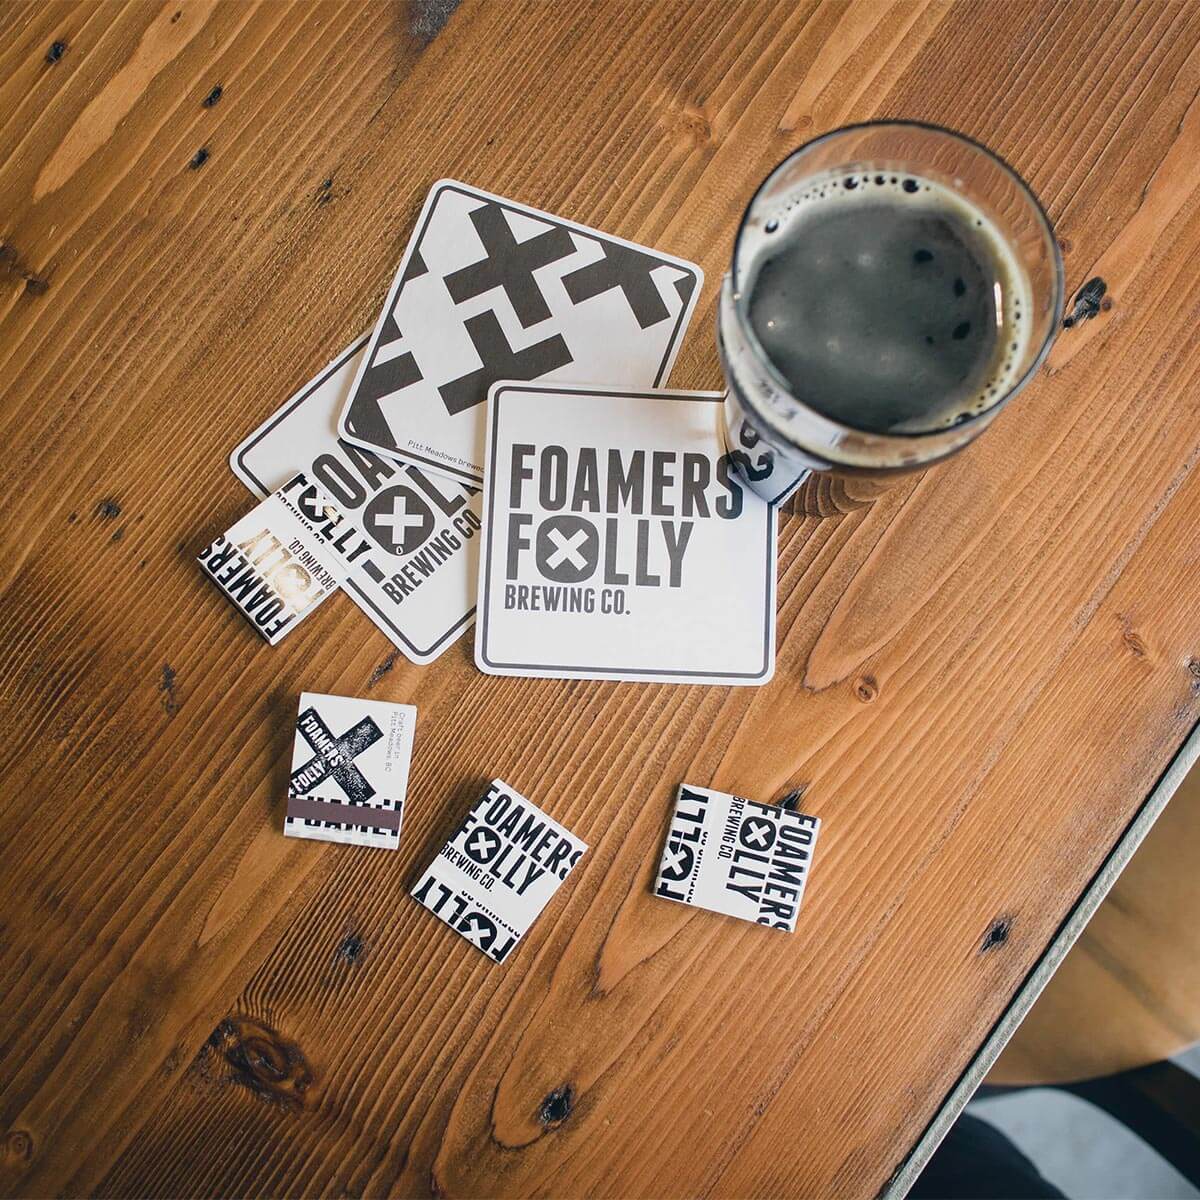 Foamers' Folly Brewing Co. branding. Rachel Teresa Park, freelance graphic designer in Victoria, BC